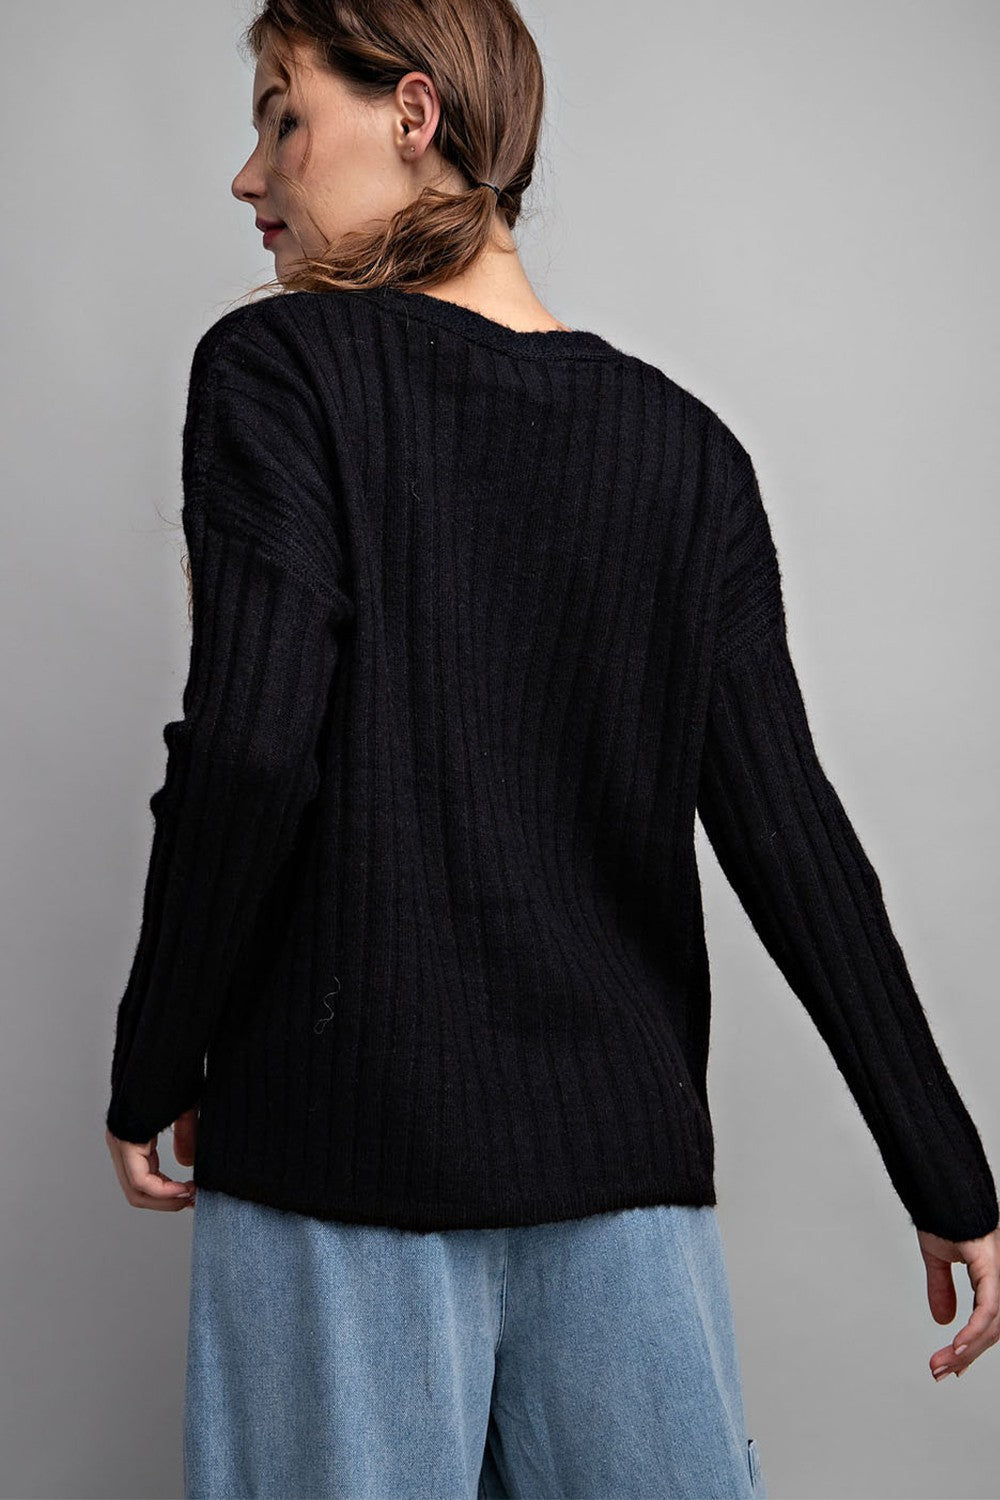 Curvy Knit Sweater in Black